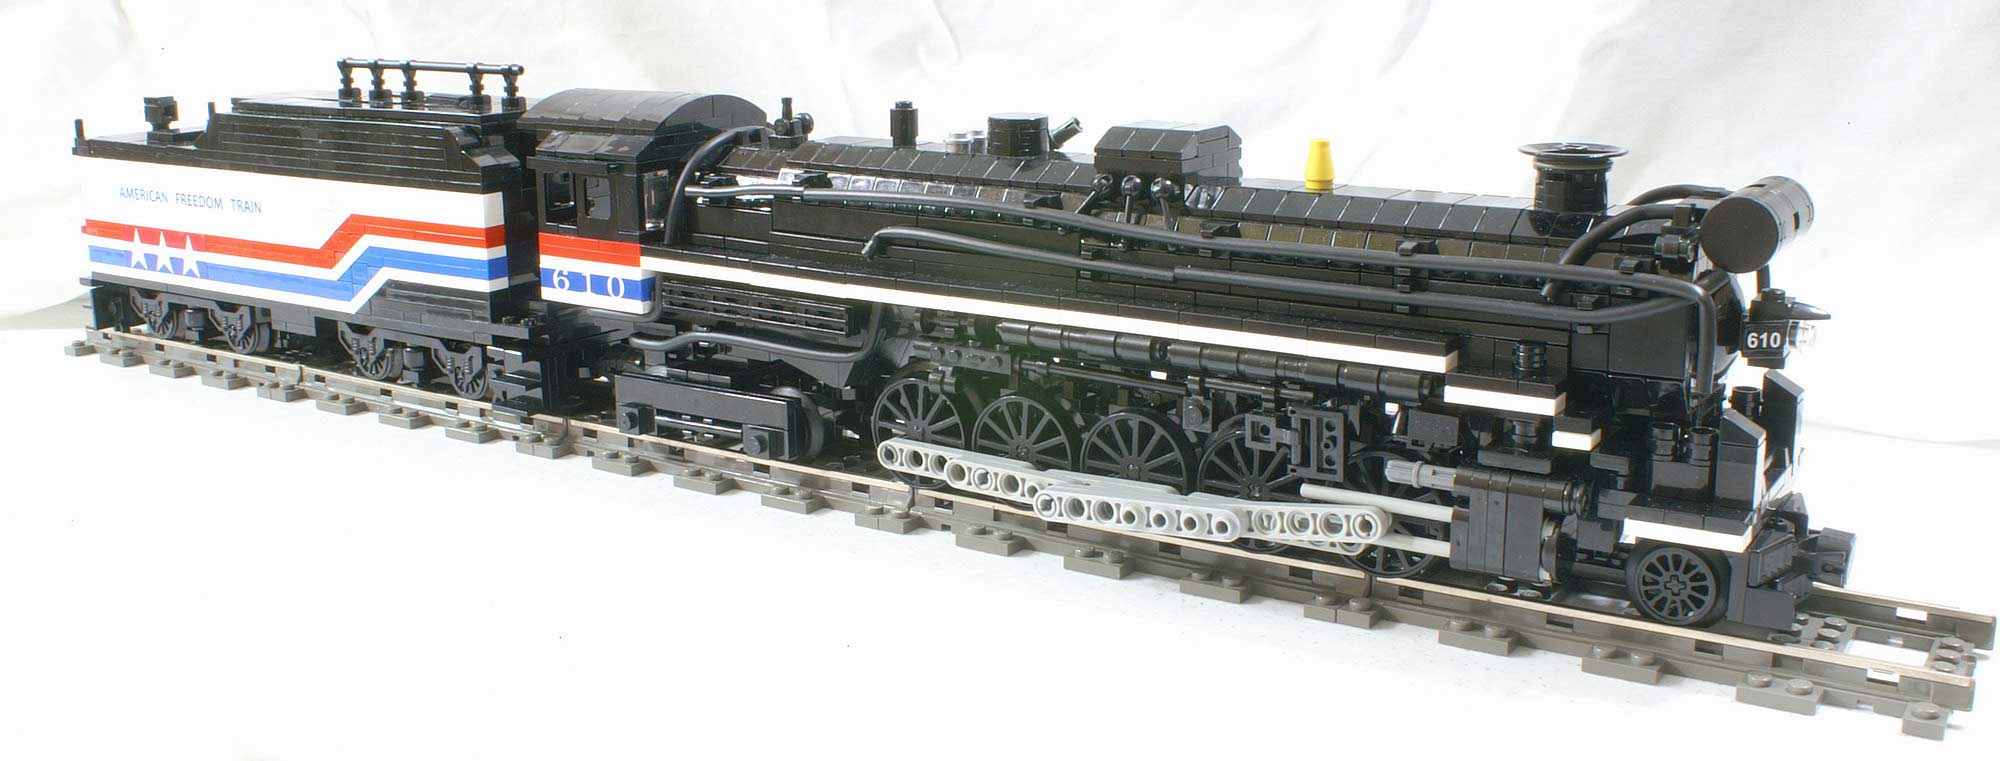 Image Gallery Lego Locomotive